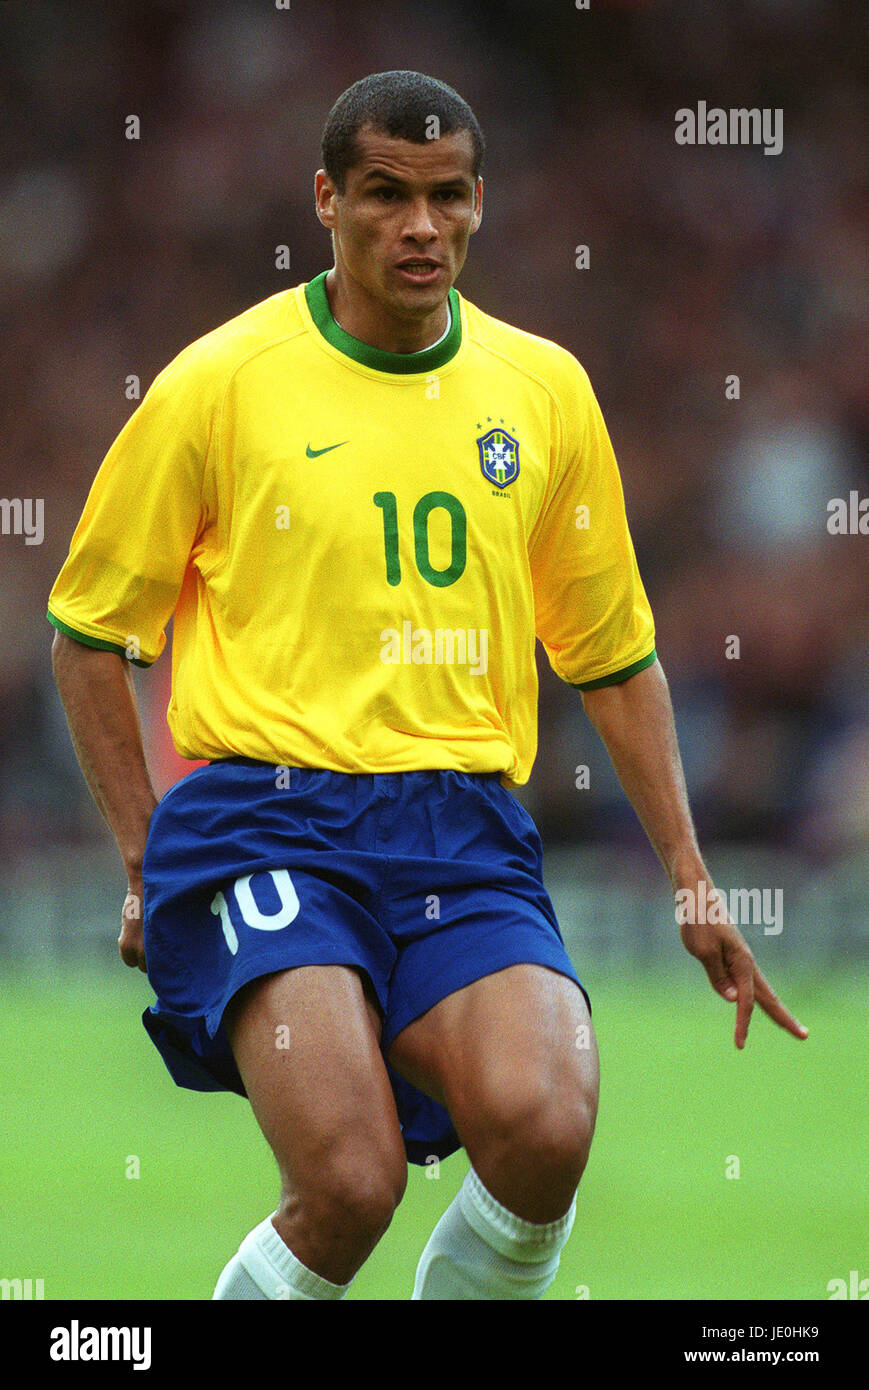 RIVALDO BRAZIL & FC BARCELONA 27 May 2000 Stock Photo - Alamy